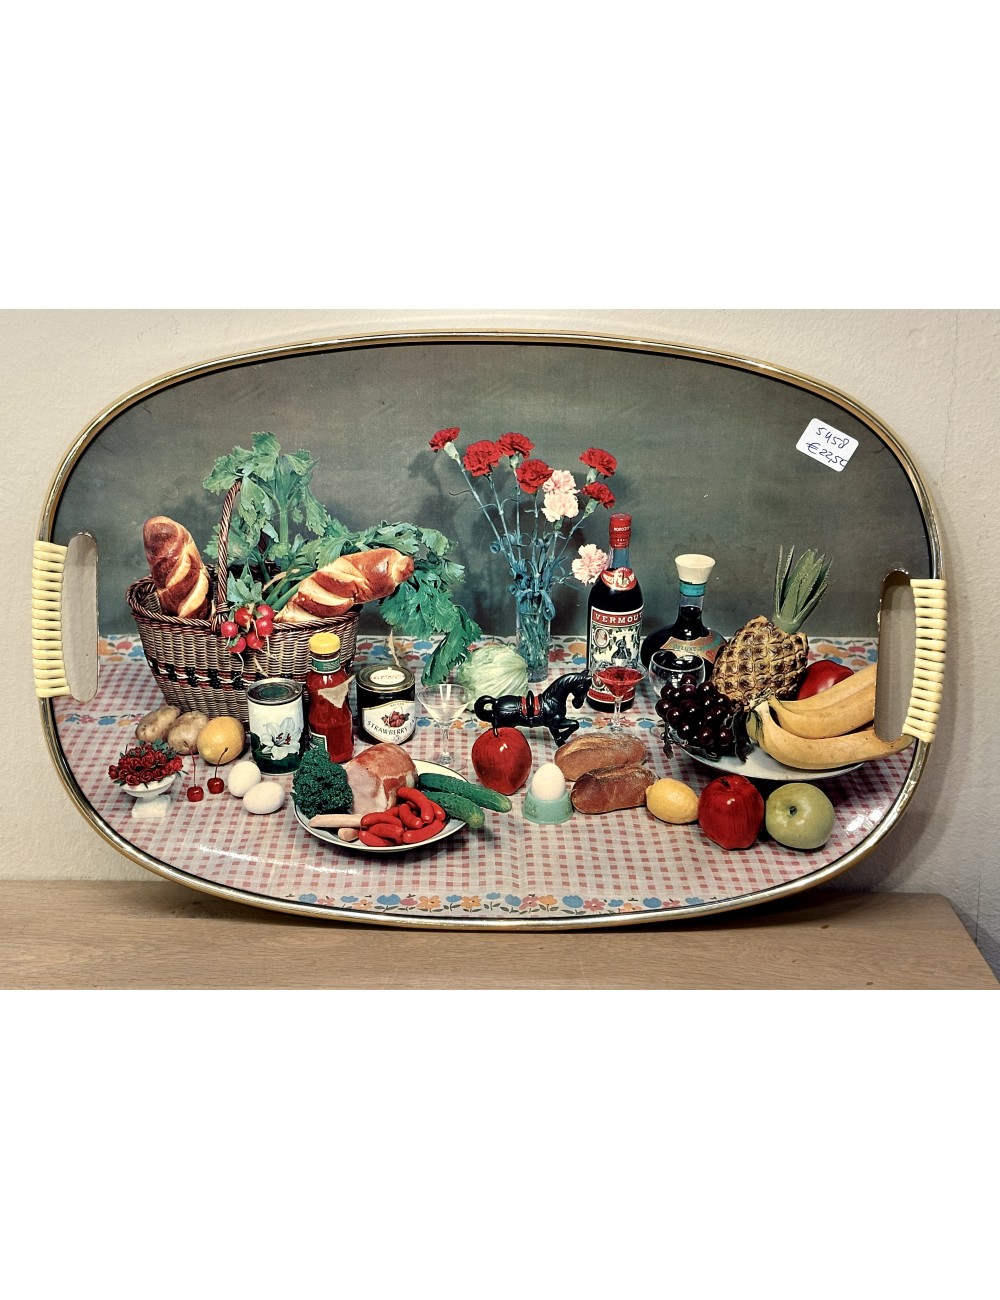 Paard Christian Feodaal Dienblad met geplastificeerde vintage décor afbeelding Vermouth, stokbrood,  fruit, vlees, groenten en anjers